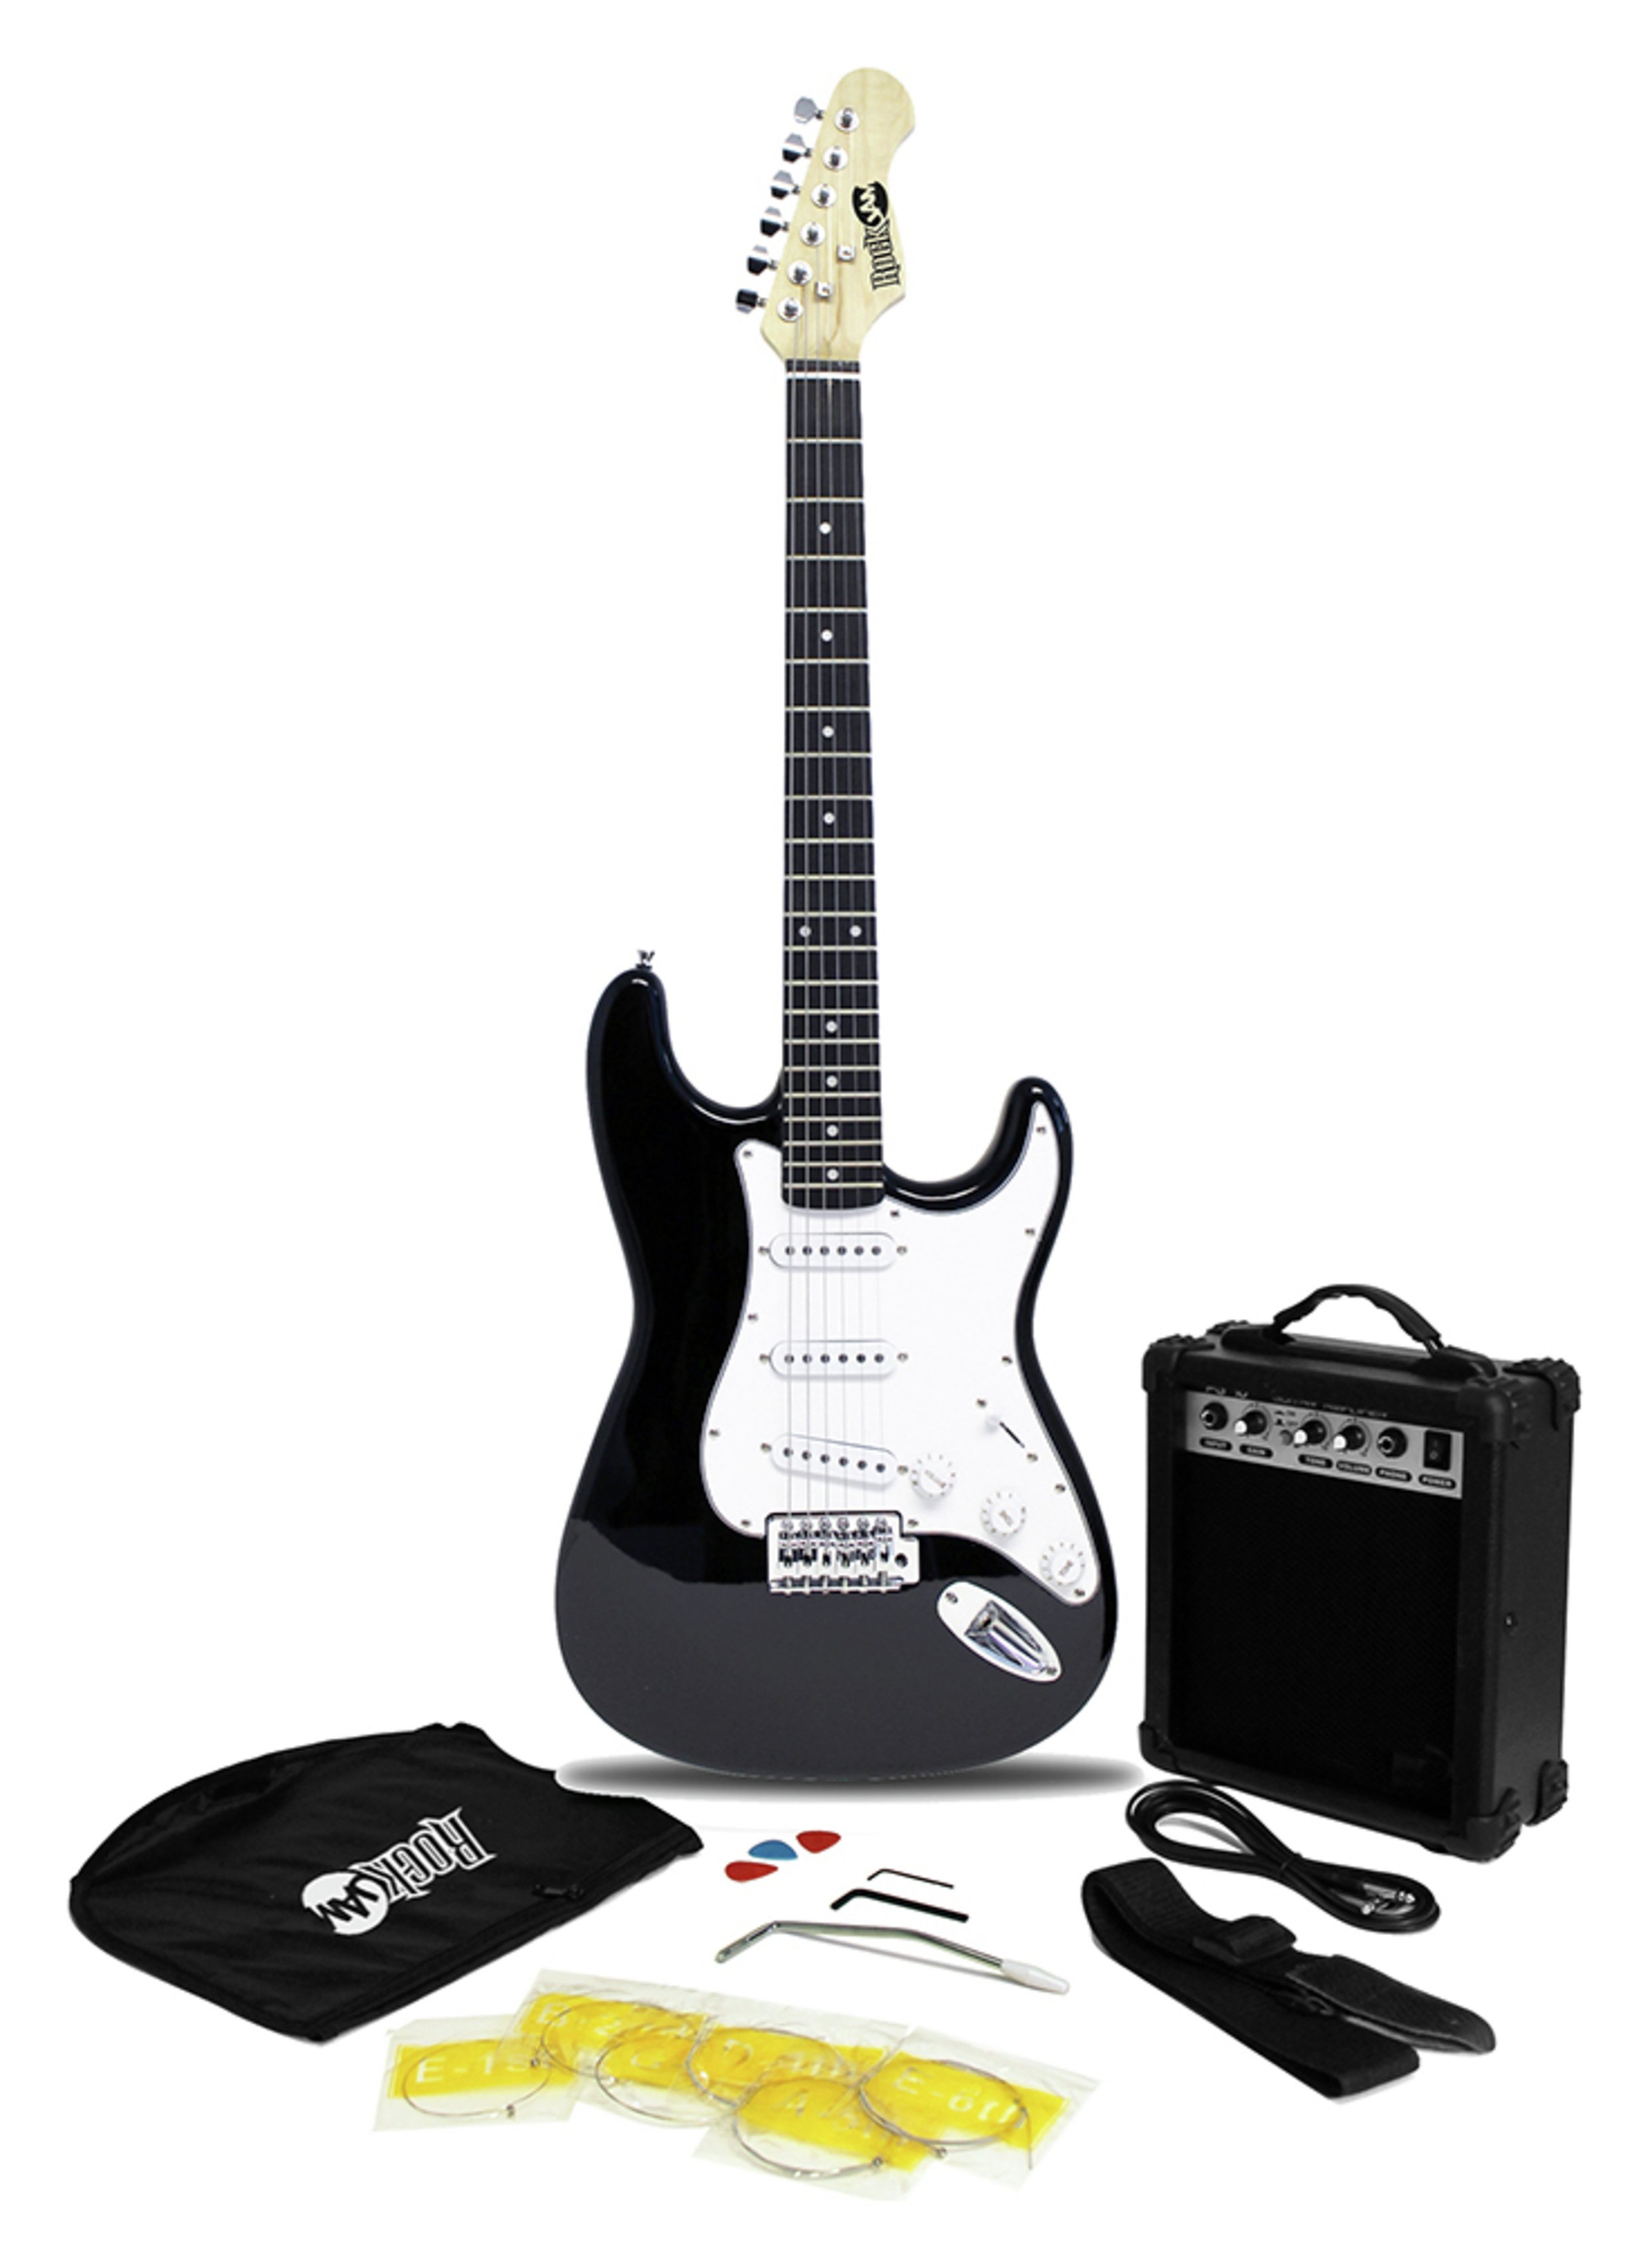 Rockburn Electric Guitar Pack - Black